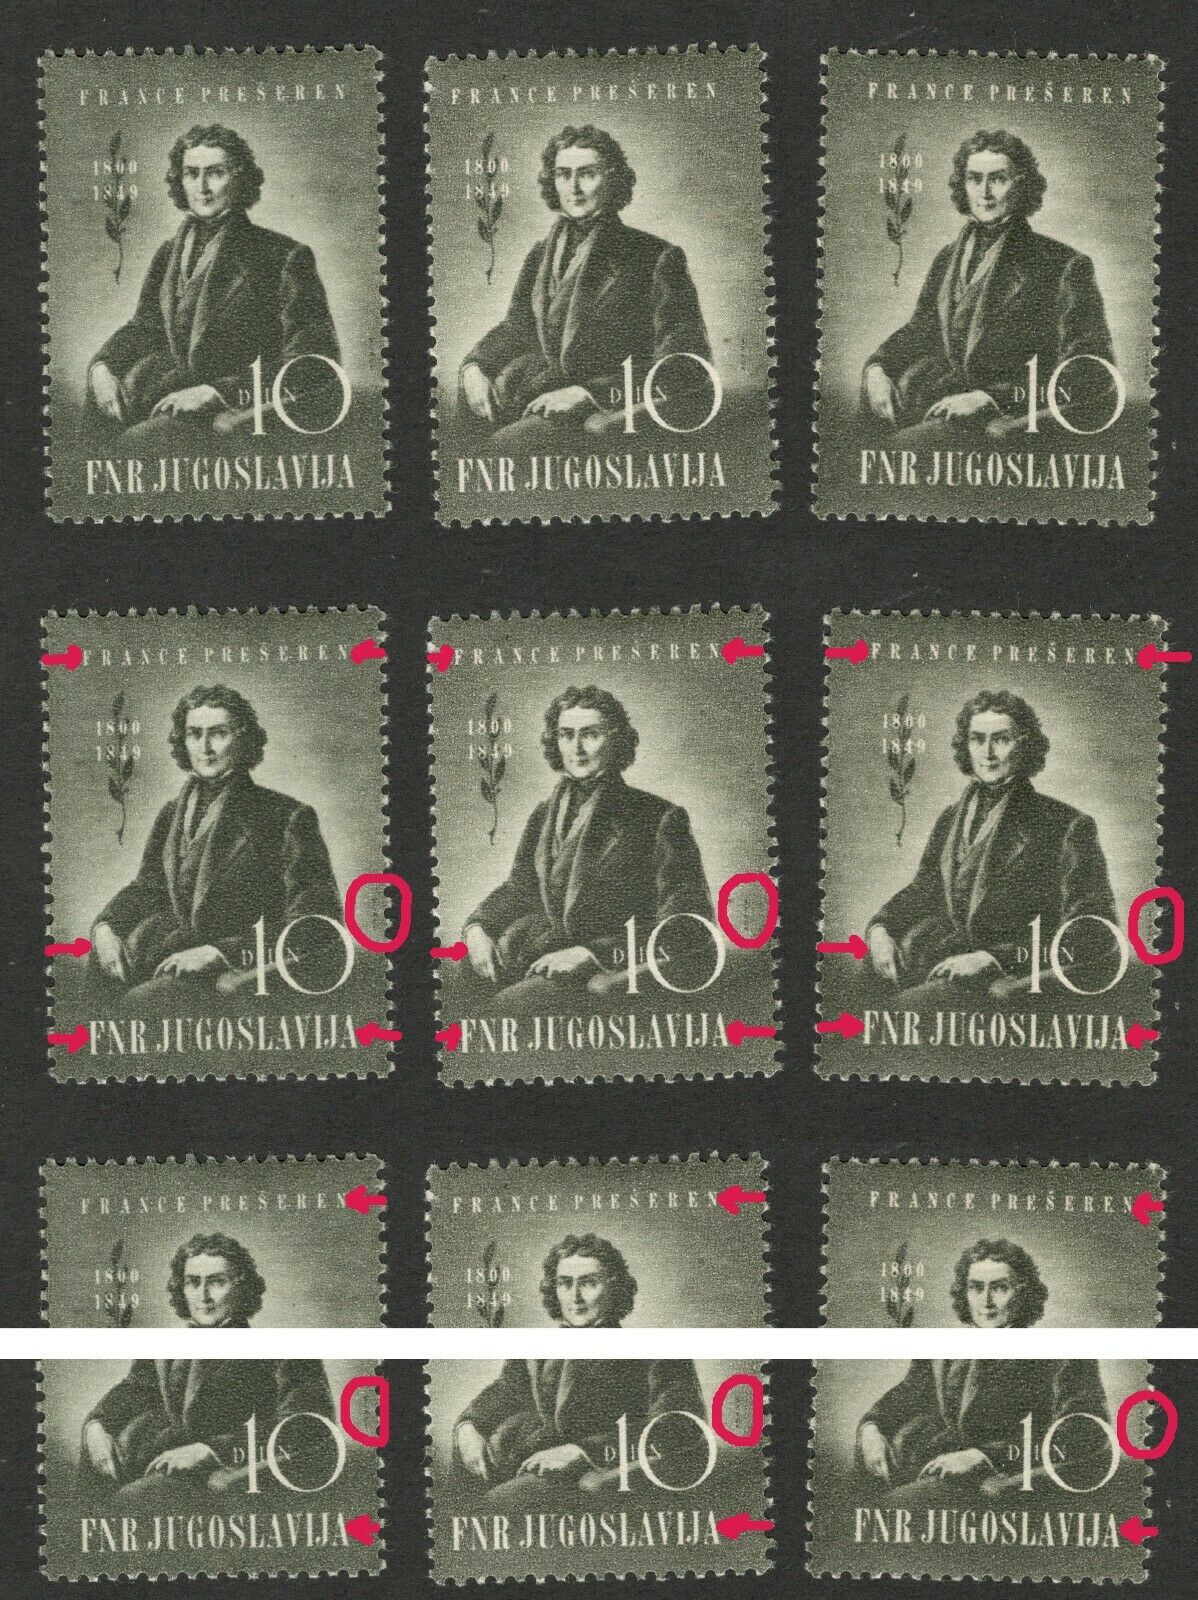 Slovenia - Yugoslavia - 3 Mnh Stamps - Plate Error -france Presern - 1949.